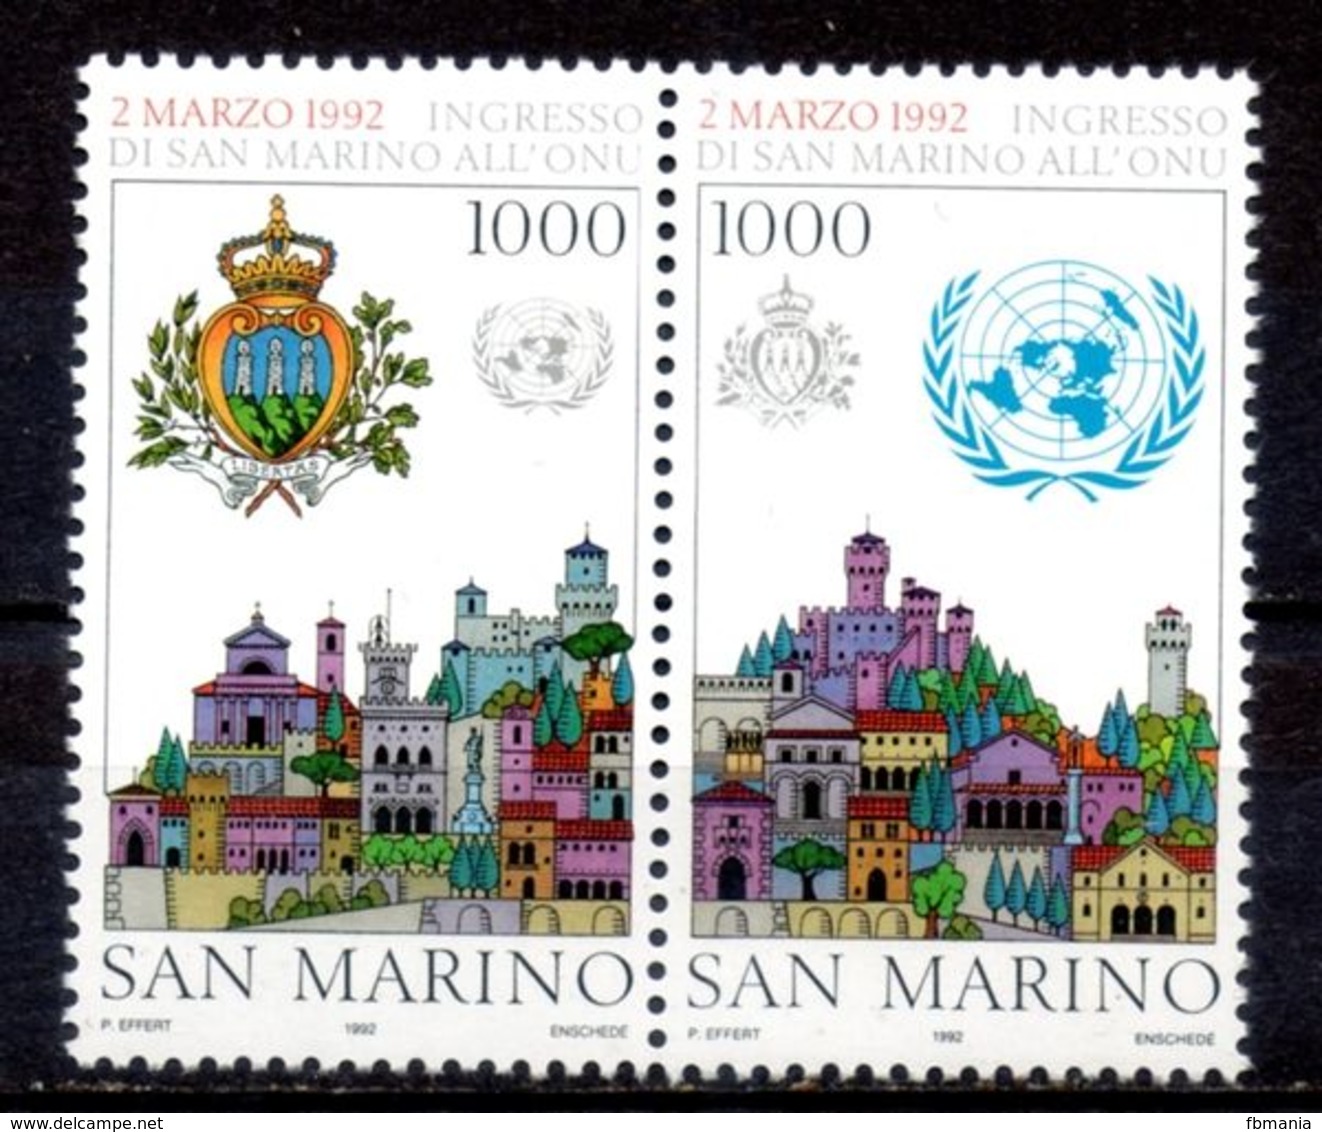 San Marino 1992 - Ingresso Di San Marino All'ONU MNH ** - Unused Stamps